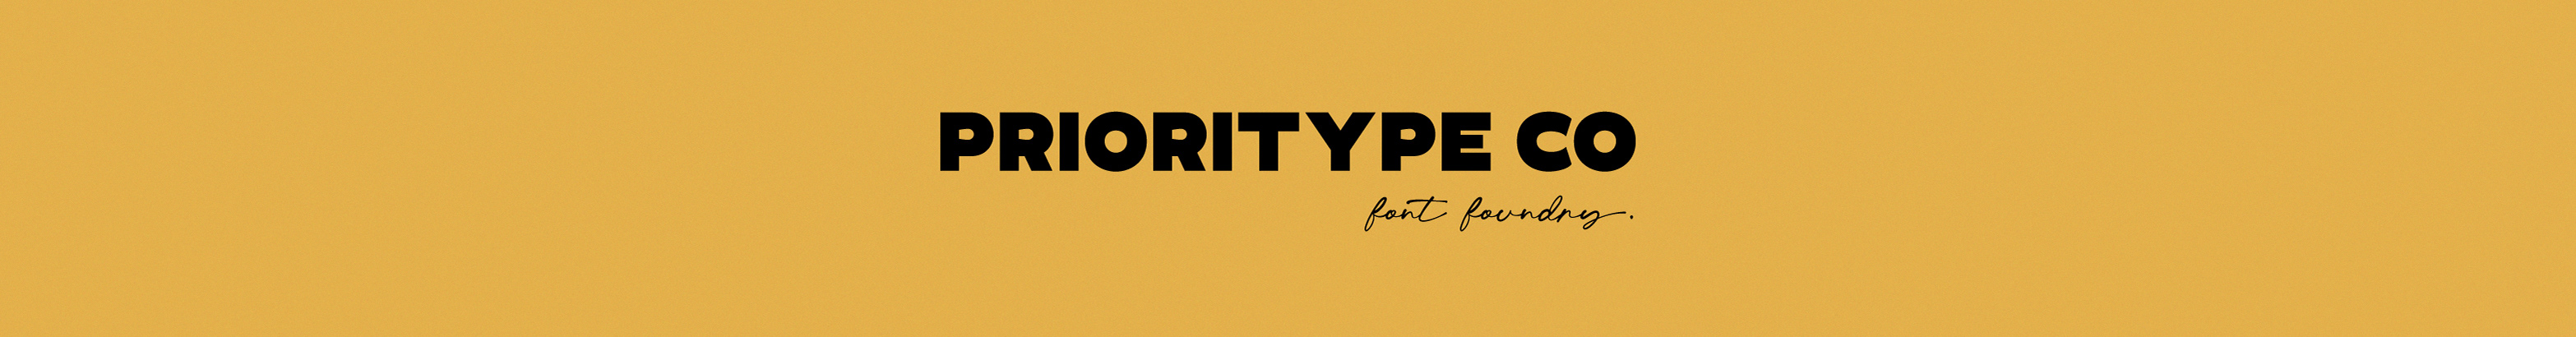 Prioritype Co's profile banner